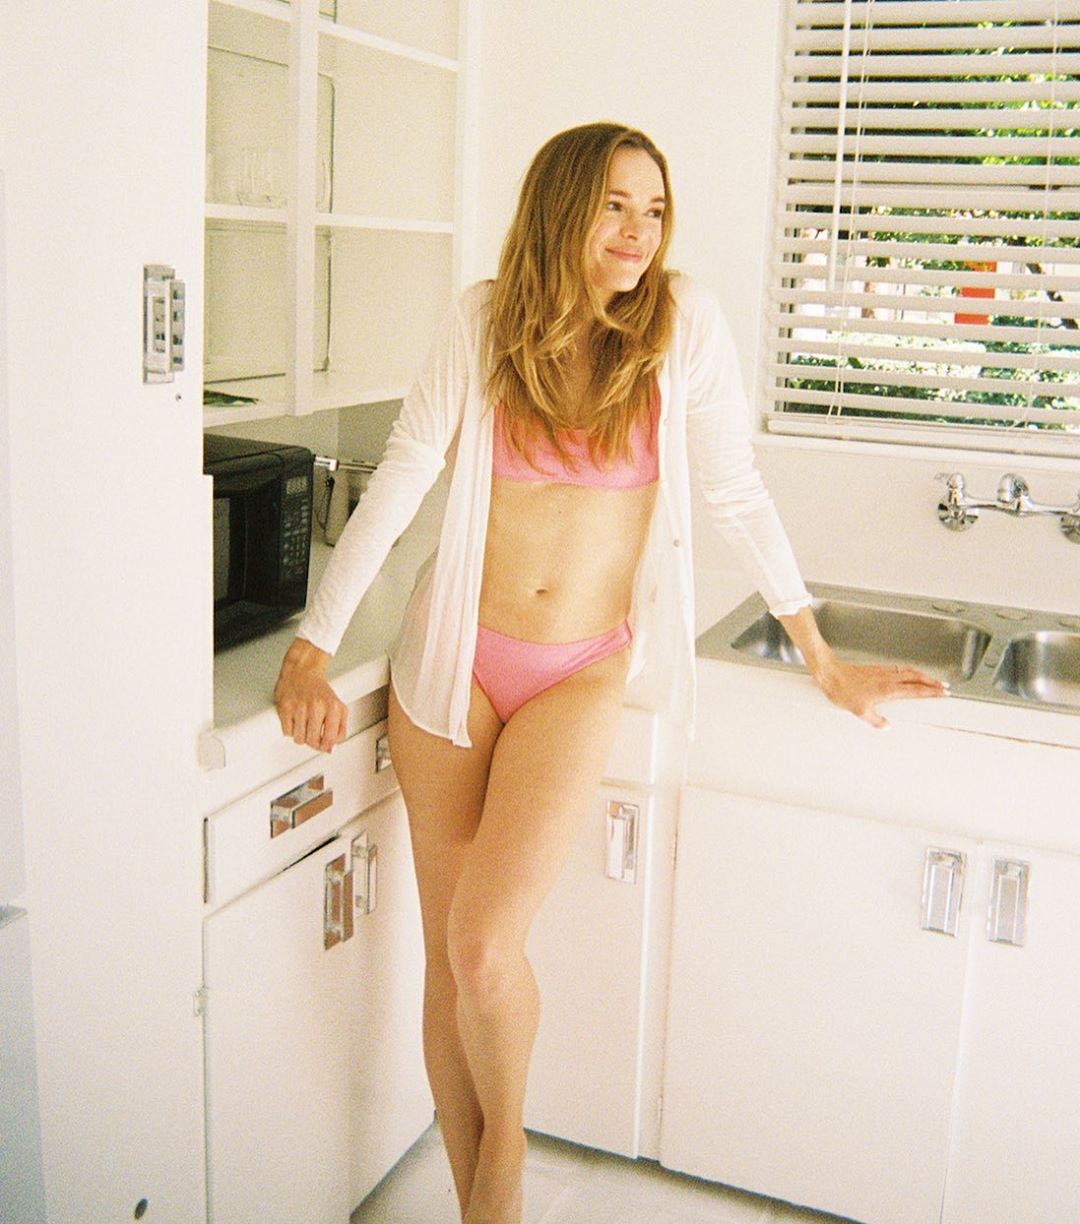 Random Sexy Danielle Panabaker Pictures (Featuring Bikini Shots)